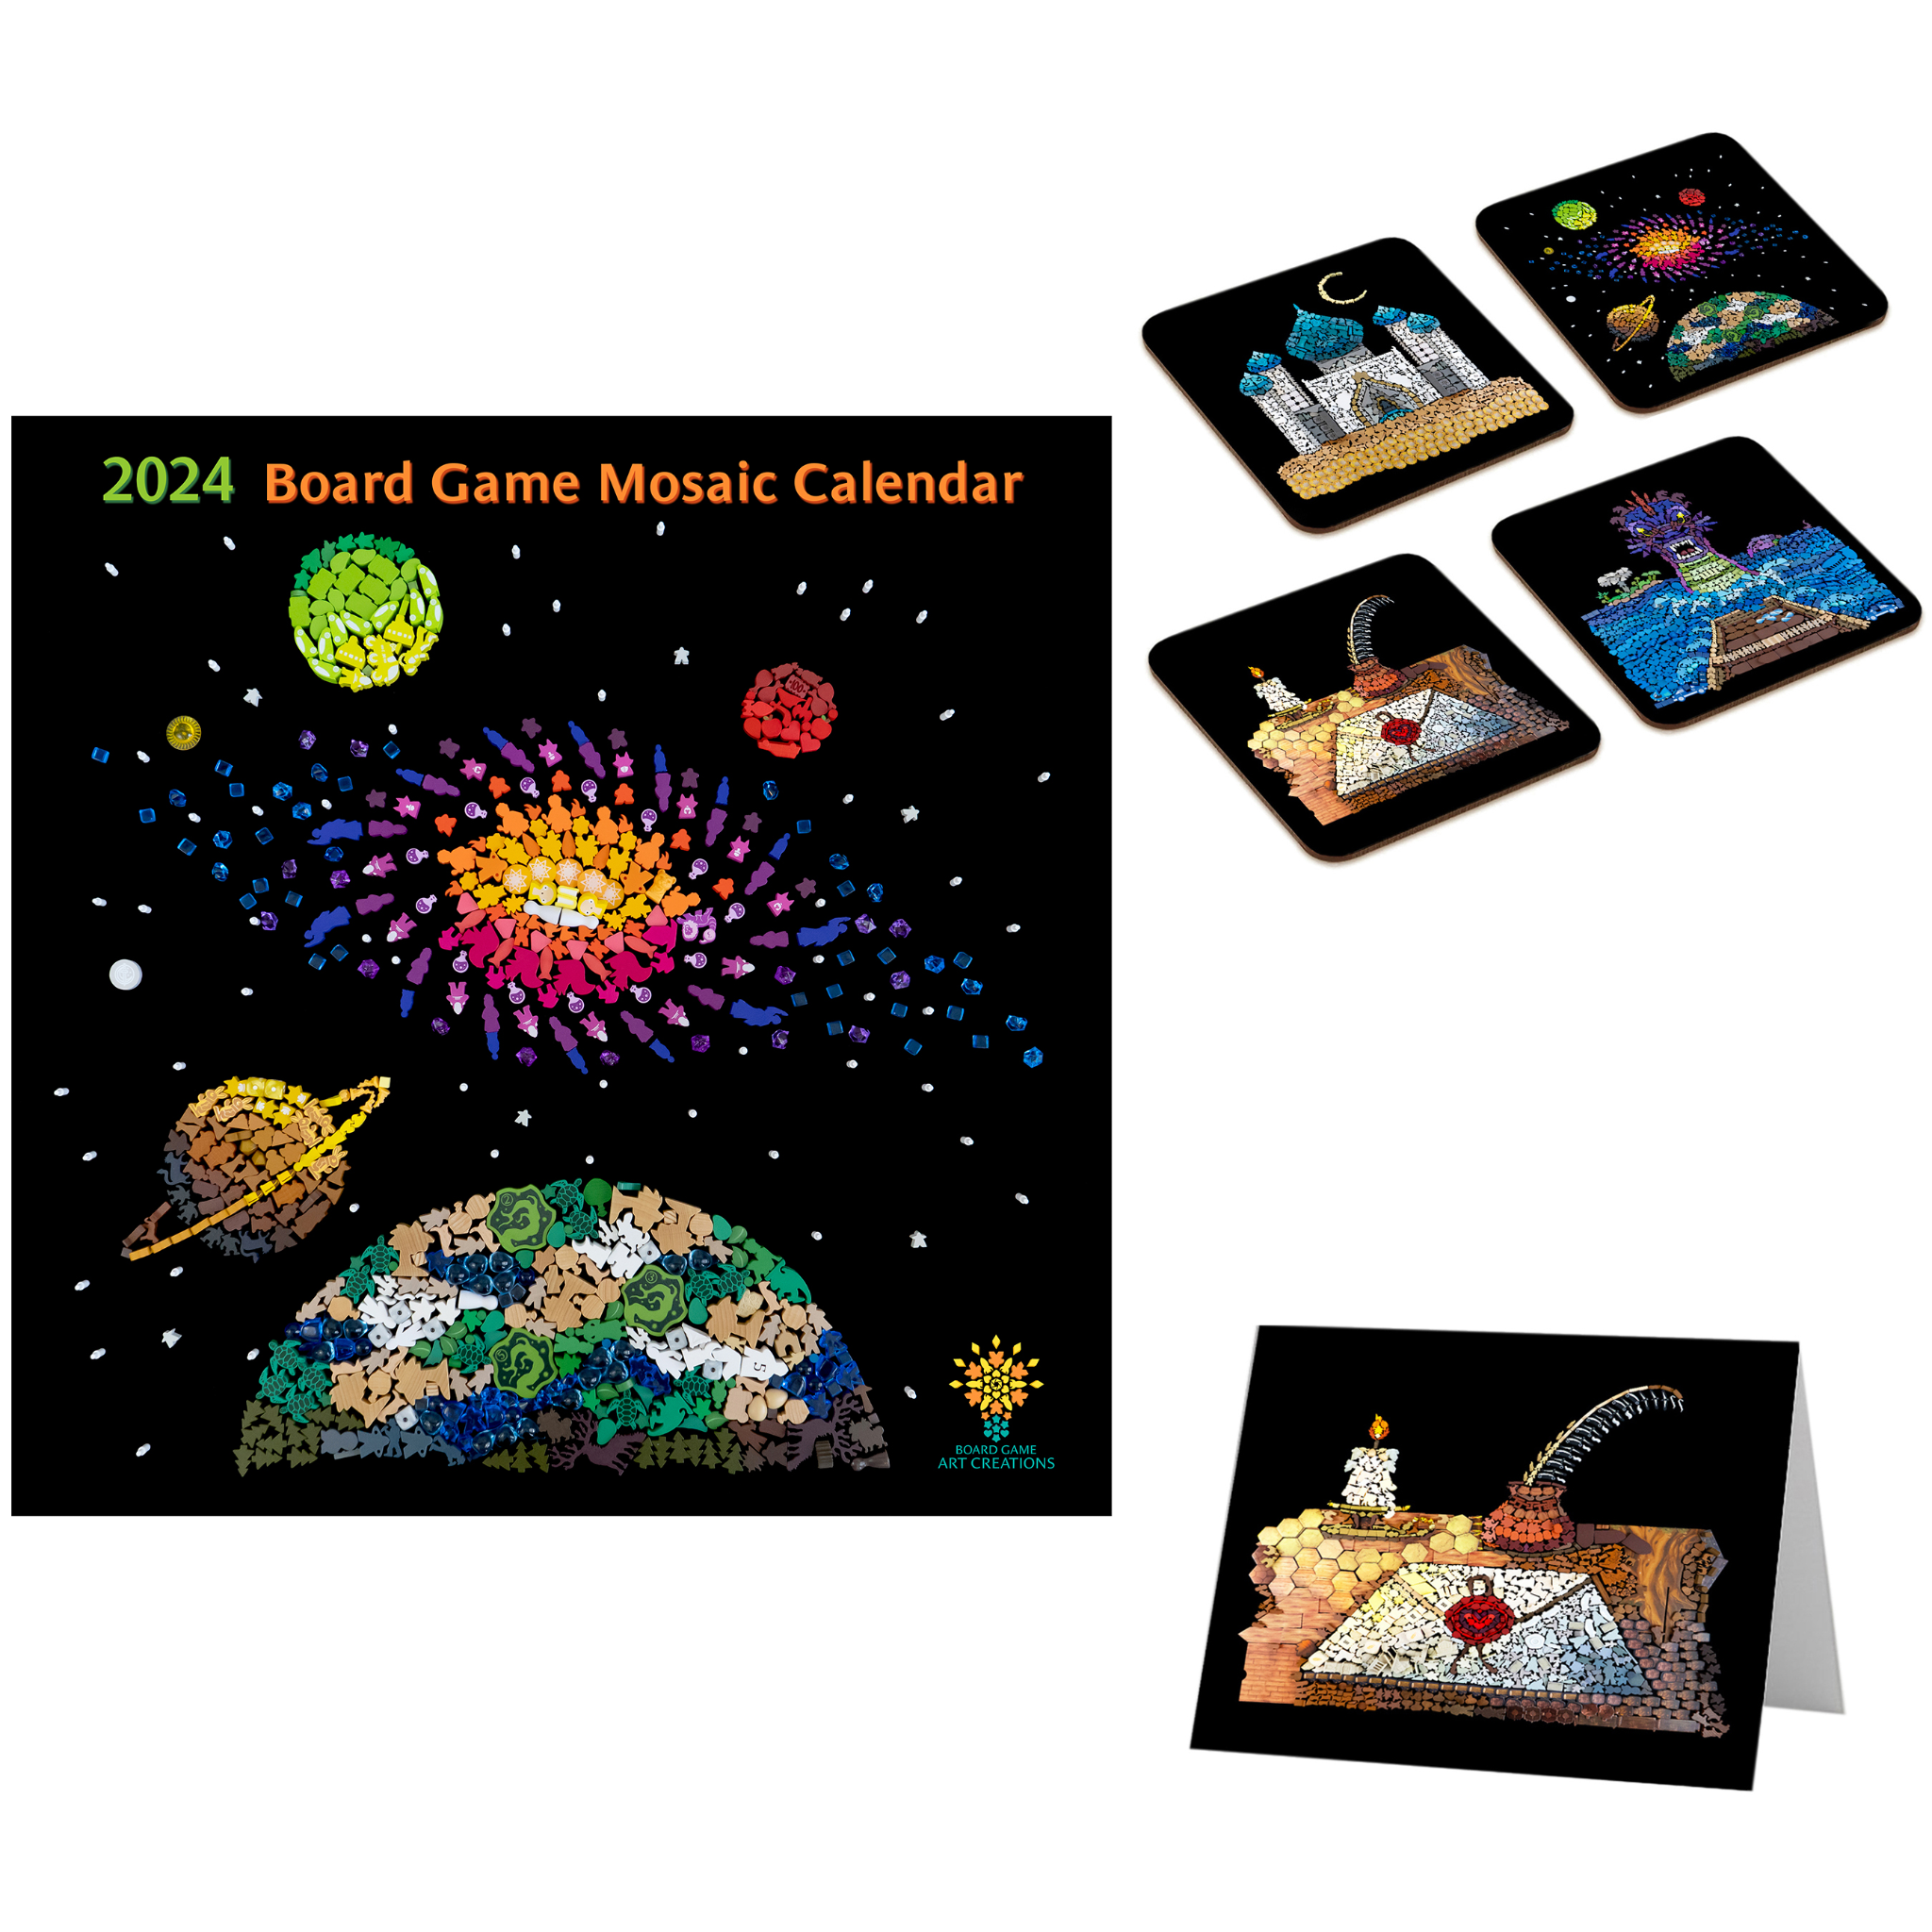 2024 Board Game Mosaic Calendar by Board Game Art Creations Allin